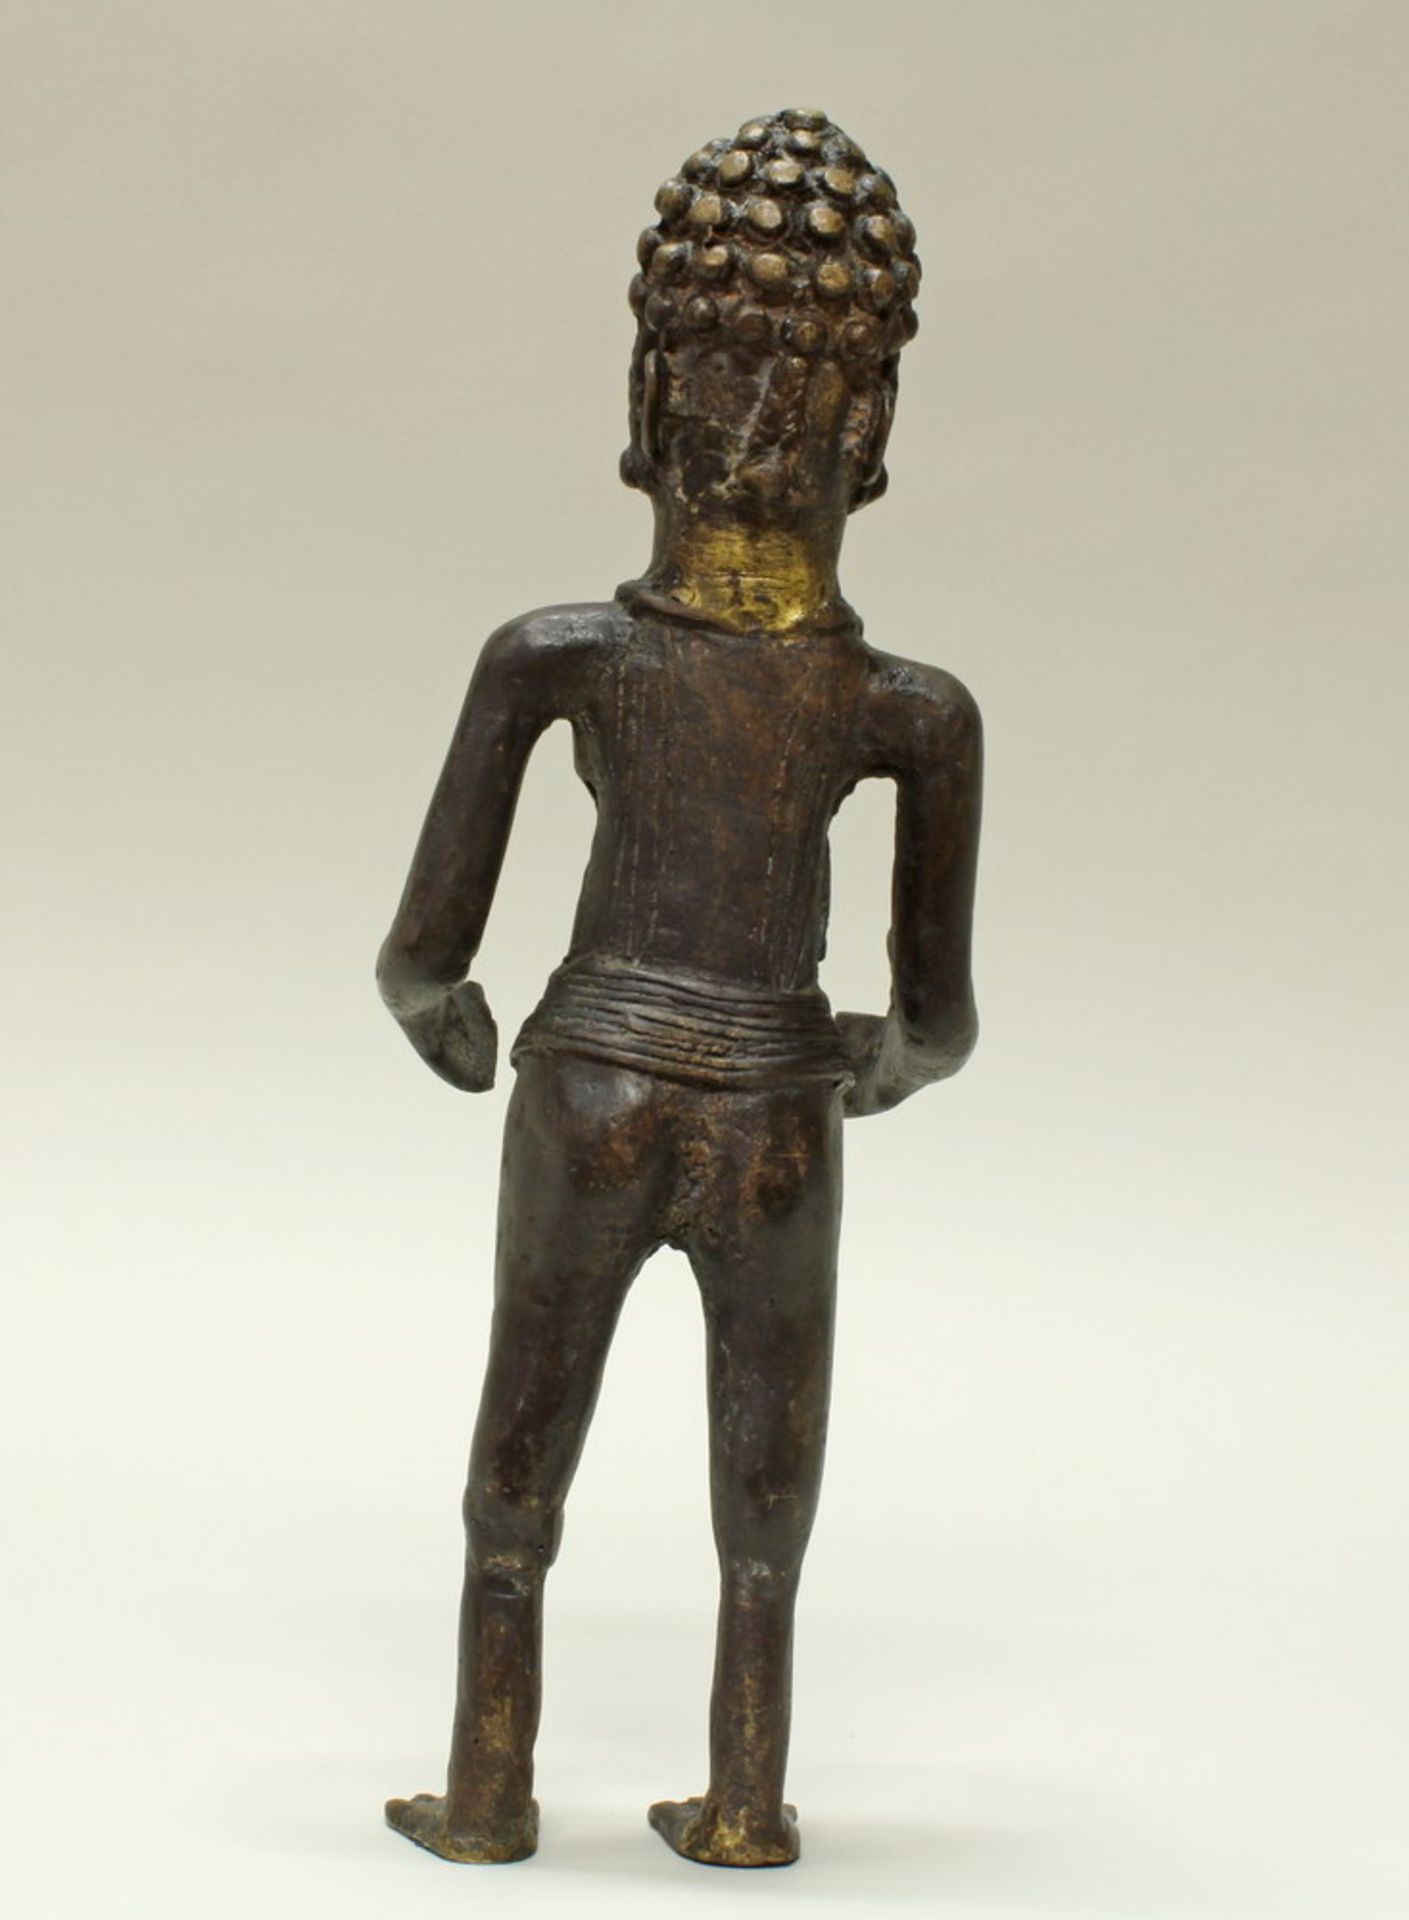 Bronzeskulptur, "Afrikaner", Benin, Afrika, 43 cm hoch- - -25.00 % buyer's premium on the hammer - Image 5 of 6